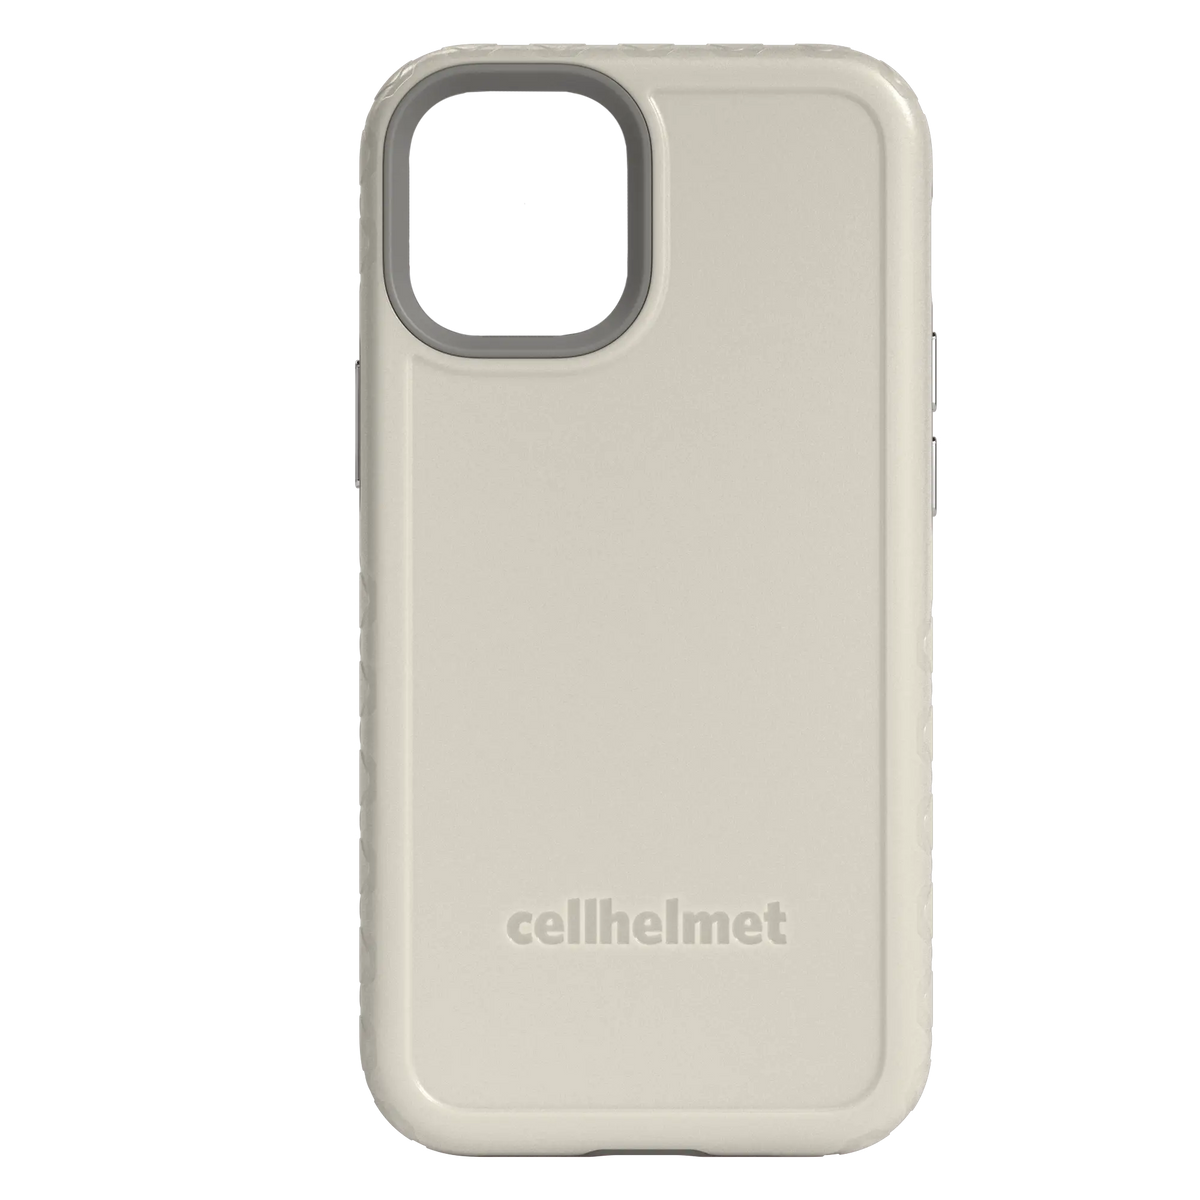 Gray cellhelmet Customizable Case for iPhone 12 Mini